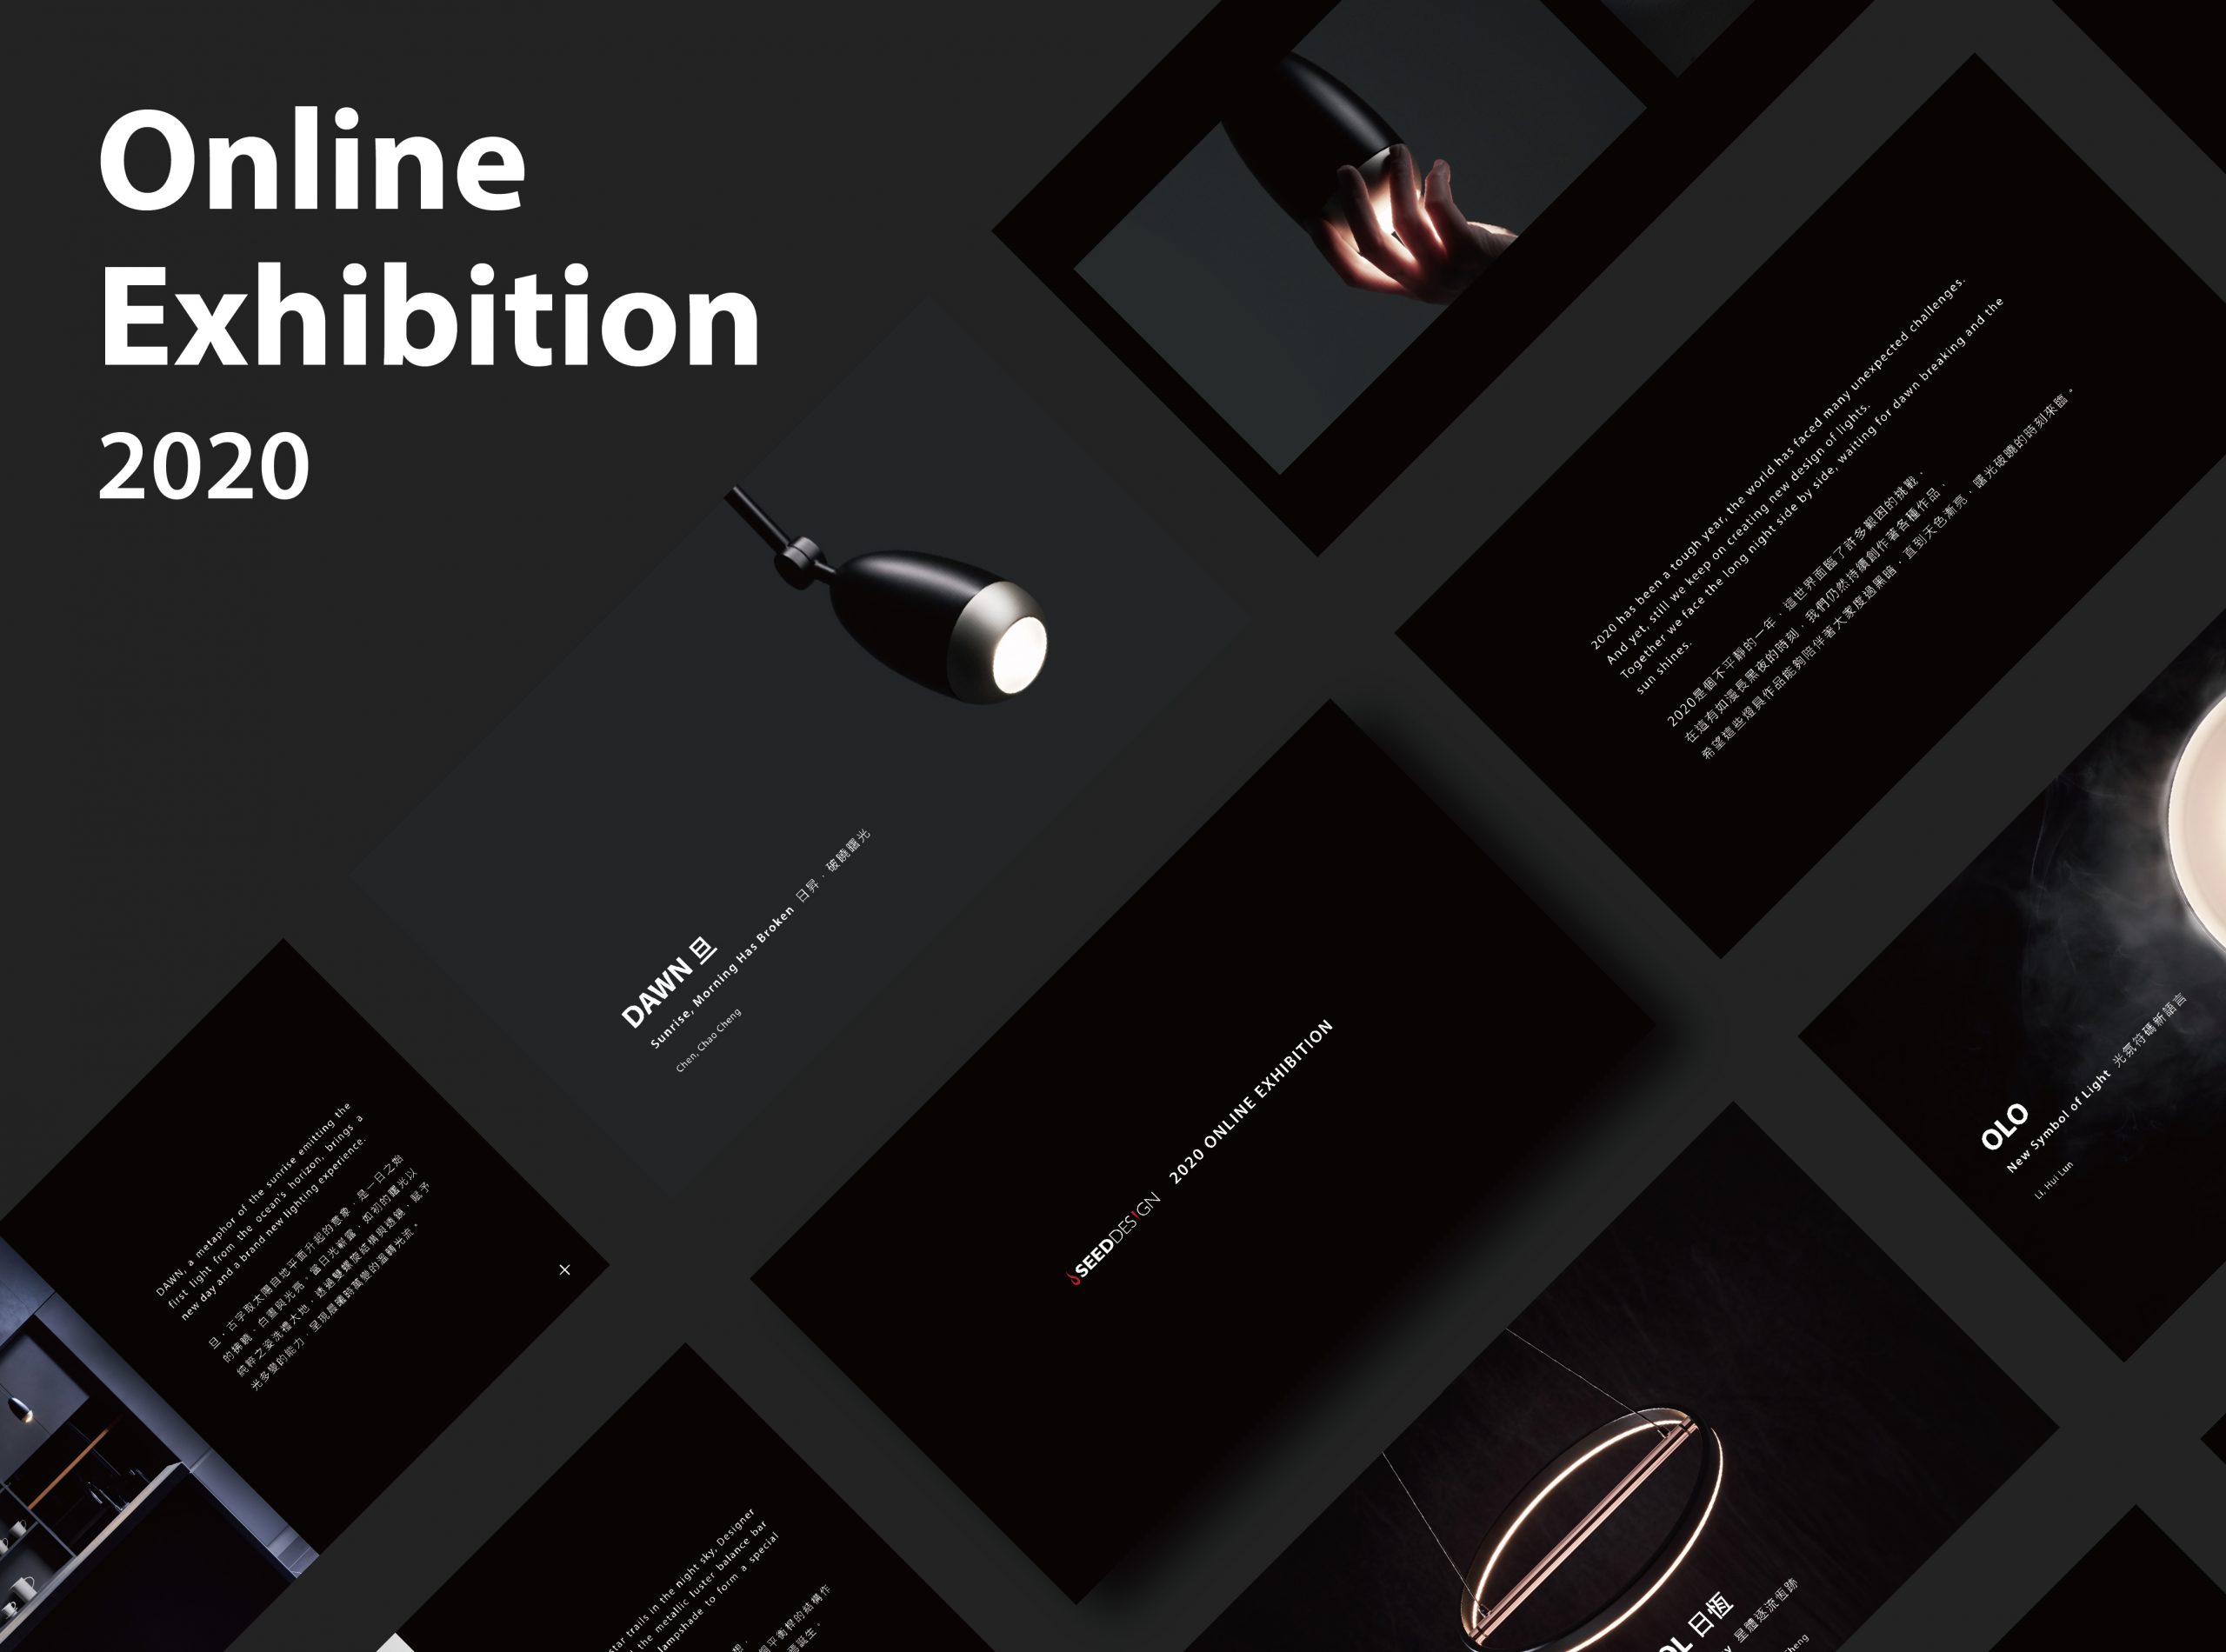 Online Exhibition Website scaled